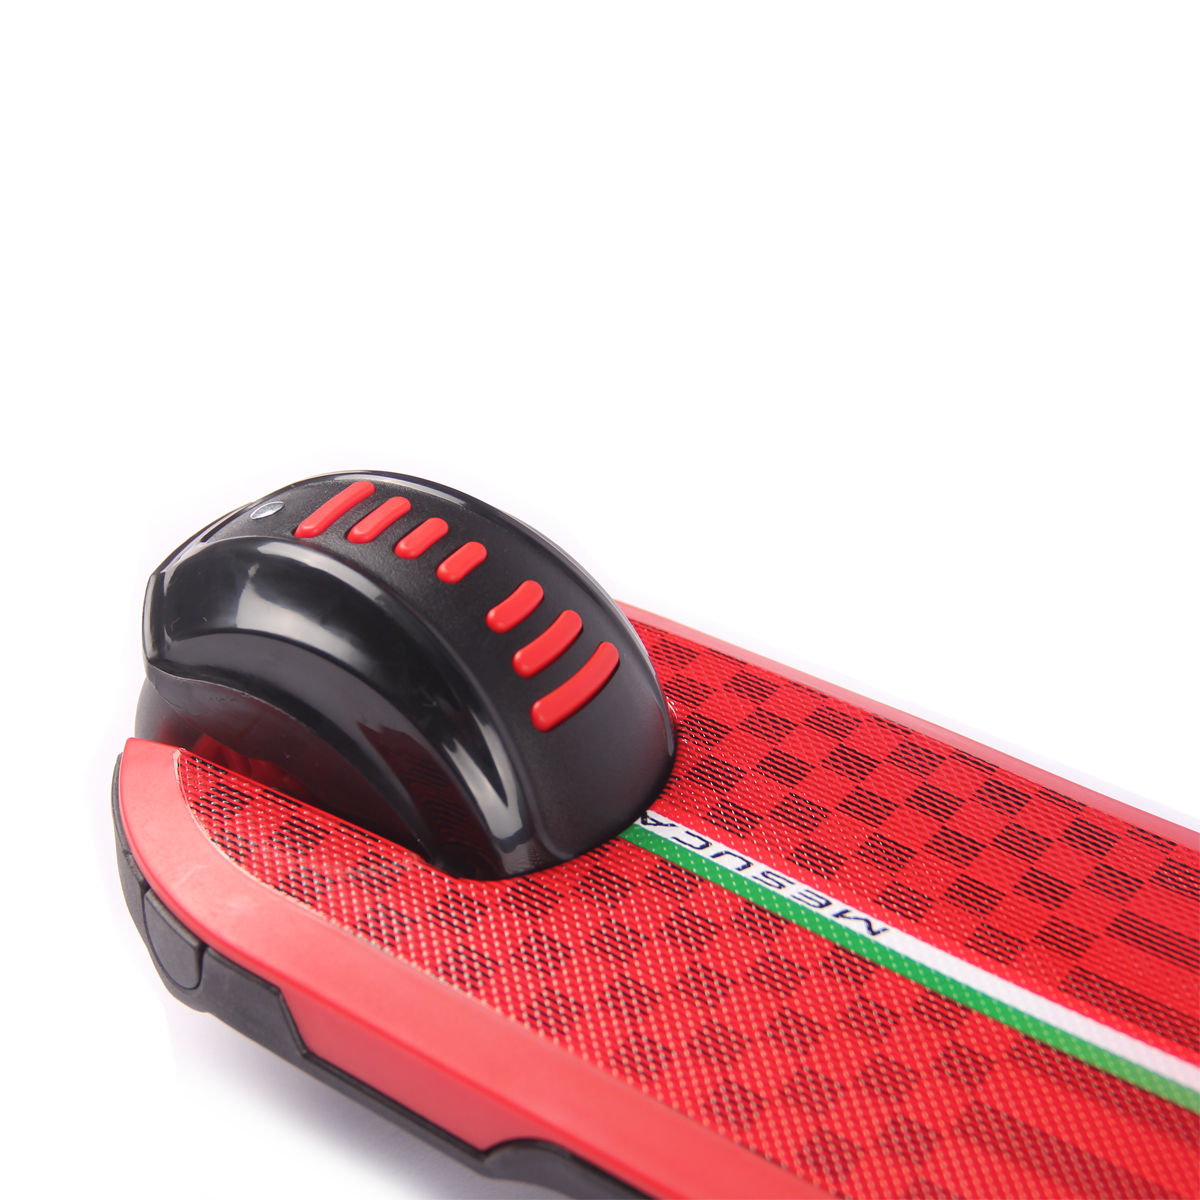 Ferrari - Foldable Twist Scooter (Red)